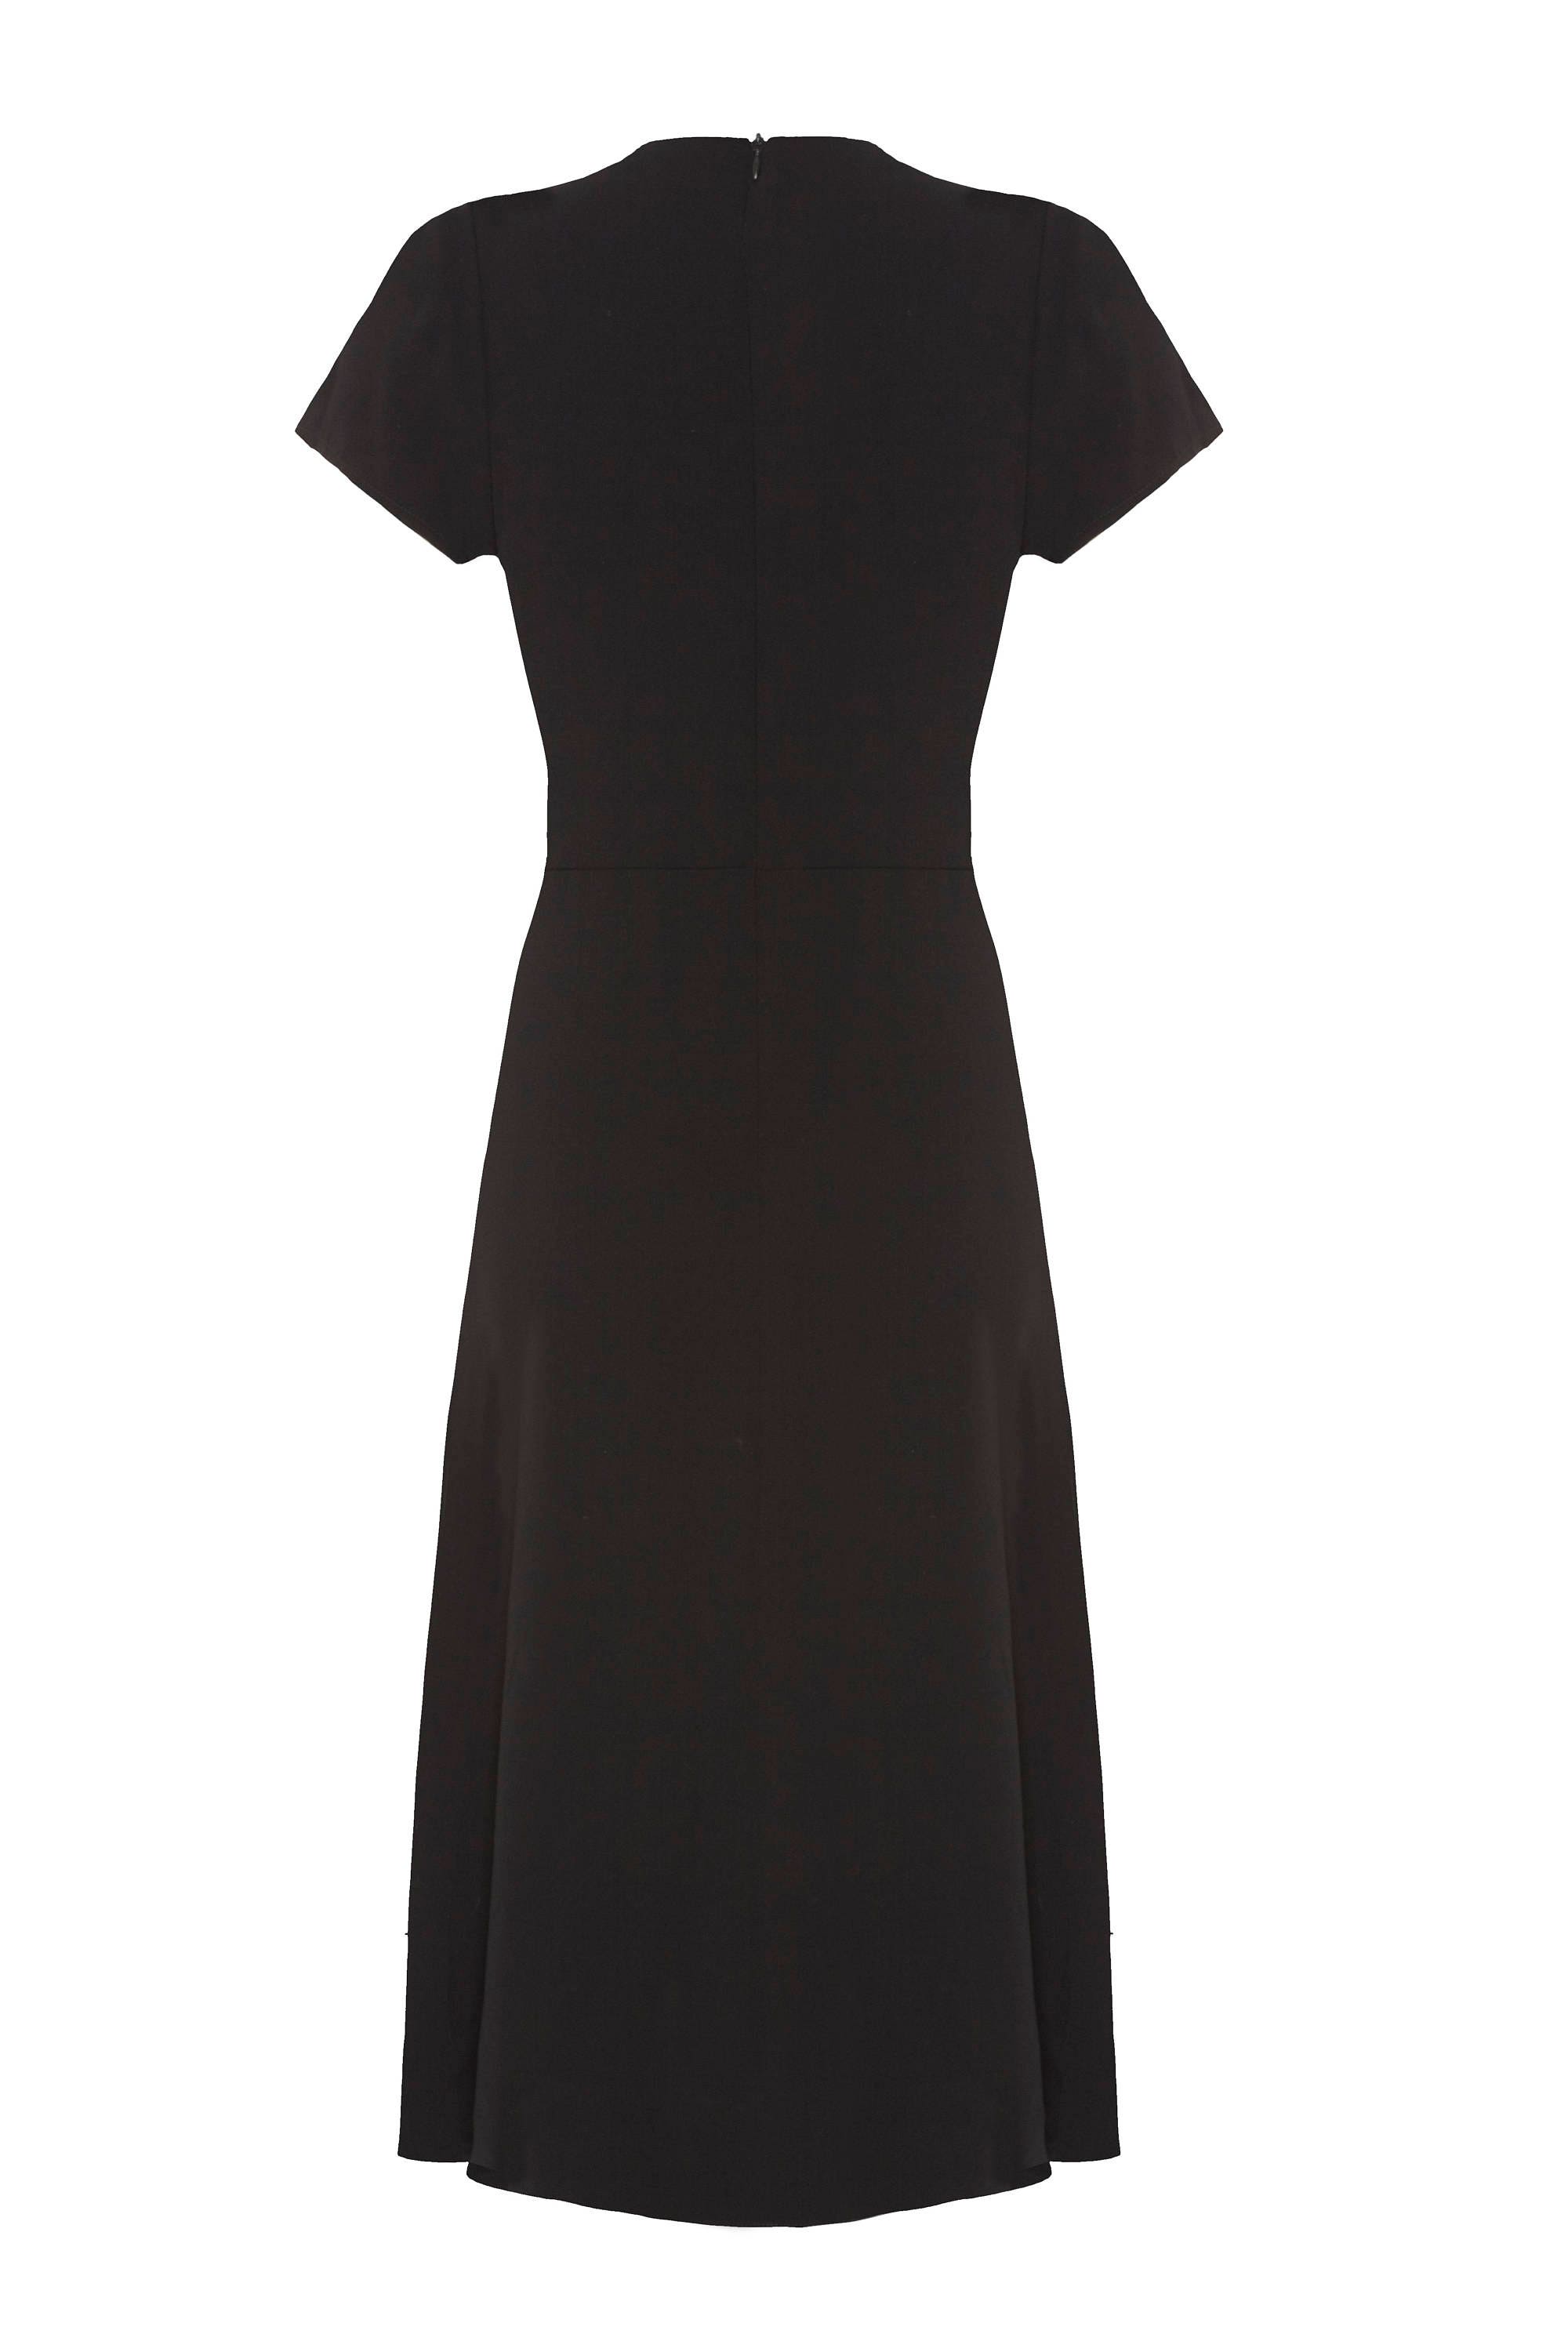 Vintage 1940's Style Black Crepe Dress - Etsy